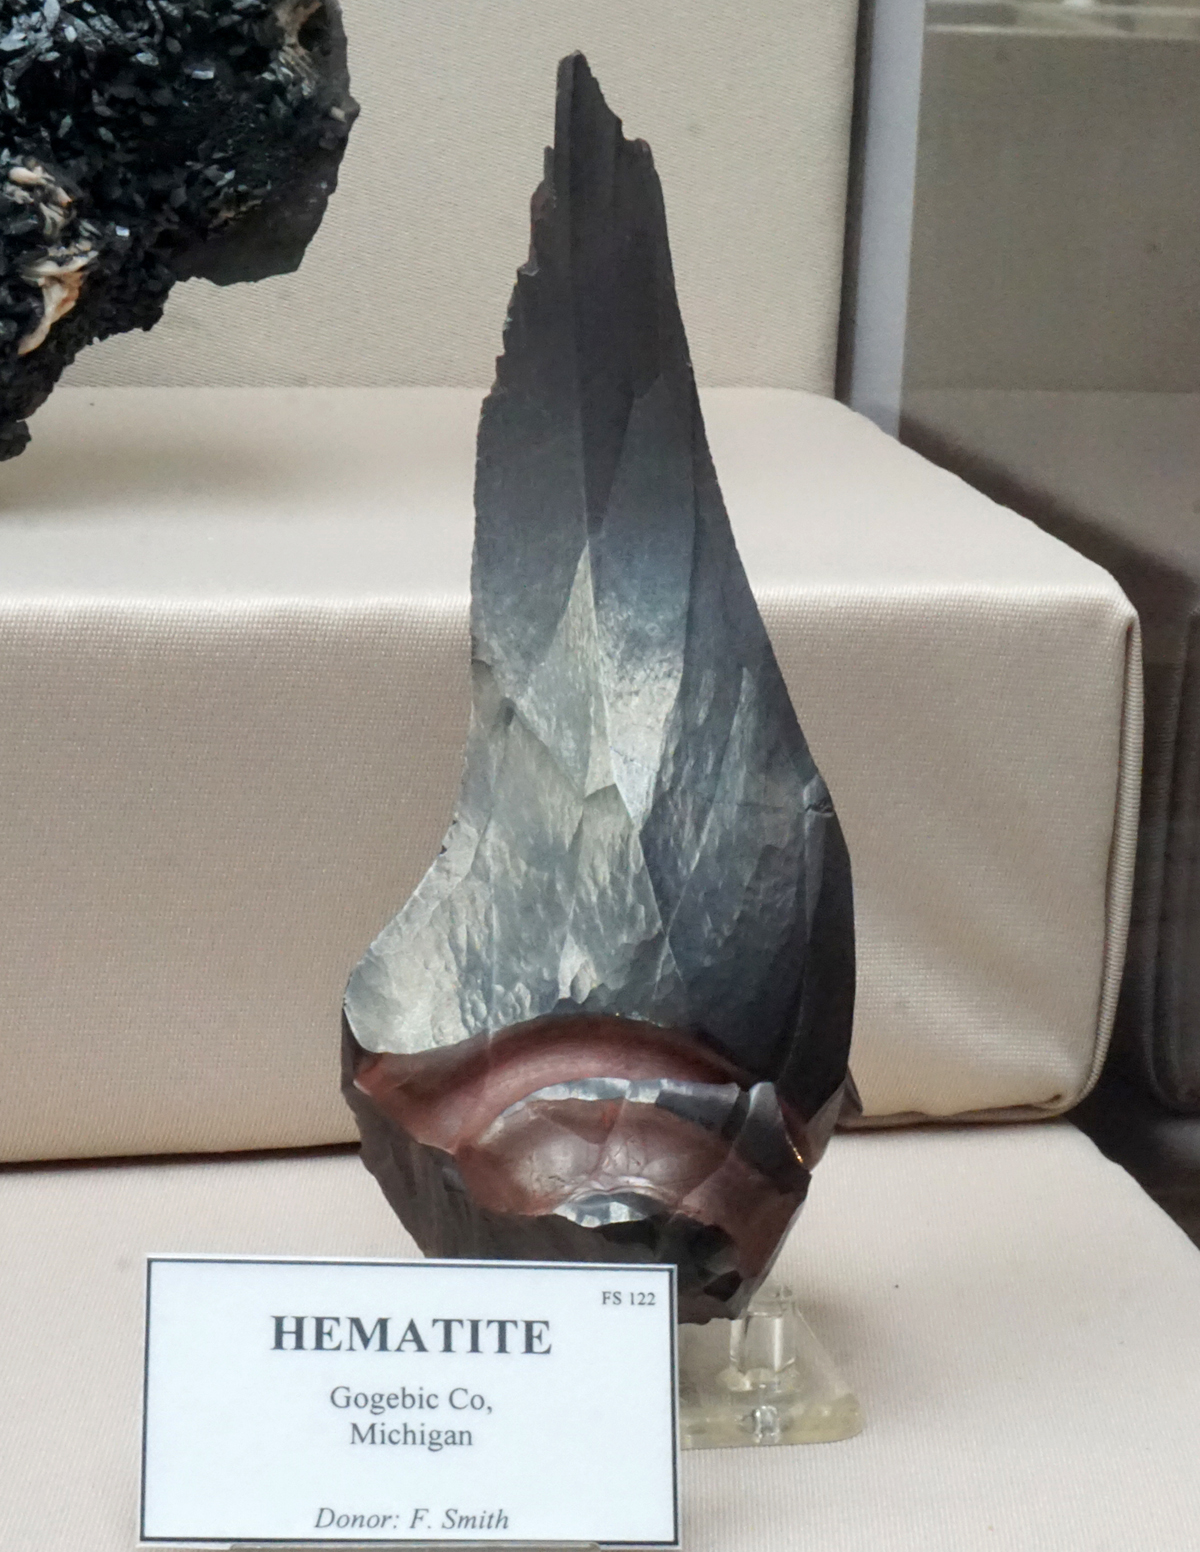 Dagger-Shaped Hematite from Gogebic Co., Michigan